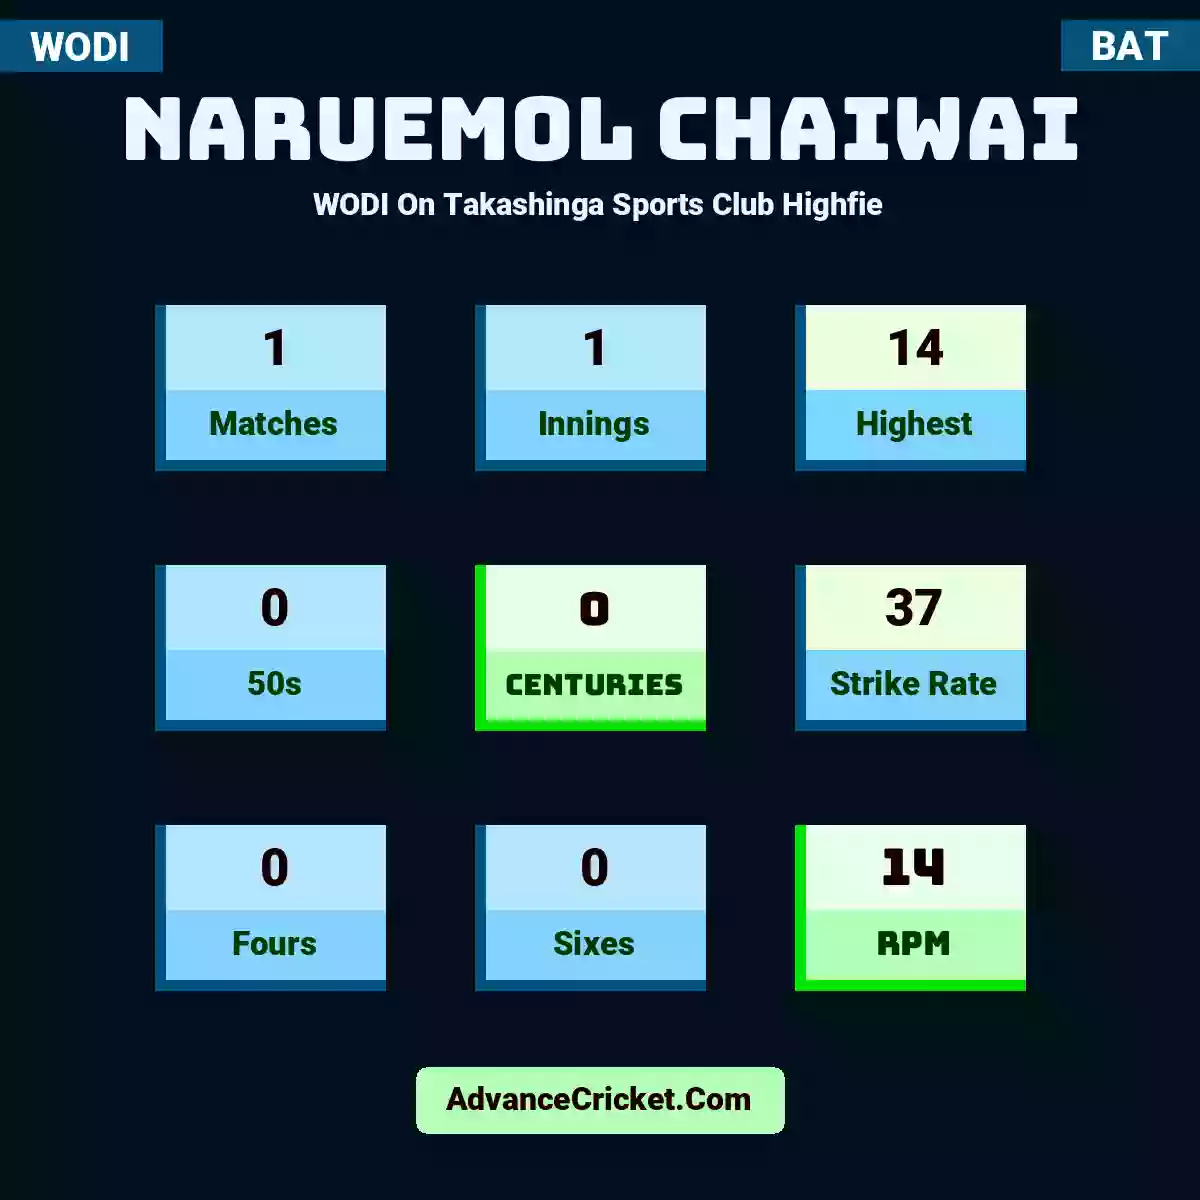 Naruemol Chaiwai WODI  On Takashinga Sports Club Highfie, Naruemol Chaiwai played 1 matches, scored 14 runs as highest, 0 half-centuries, and 0 centuries, with a strike rate of 37. N.Chaiwai hit 0 fours and 0 sixes, with an RPM of 14.